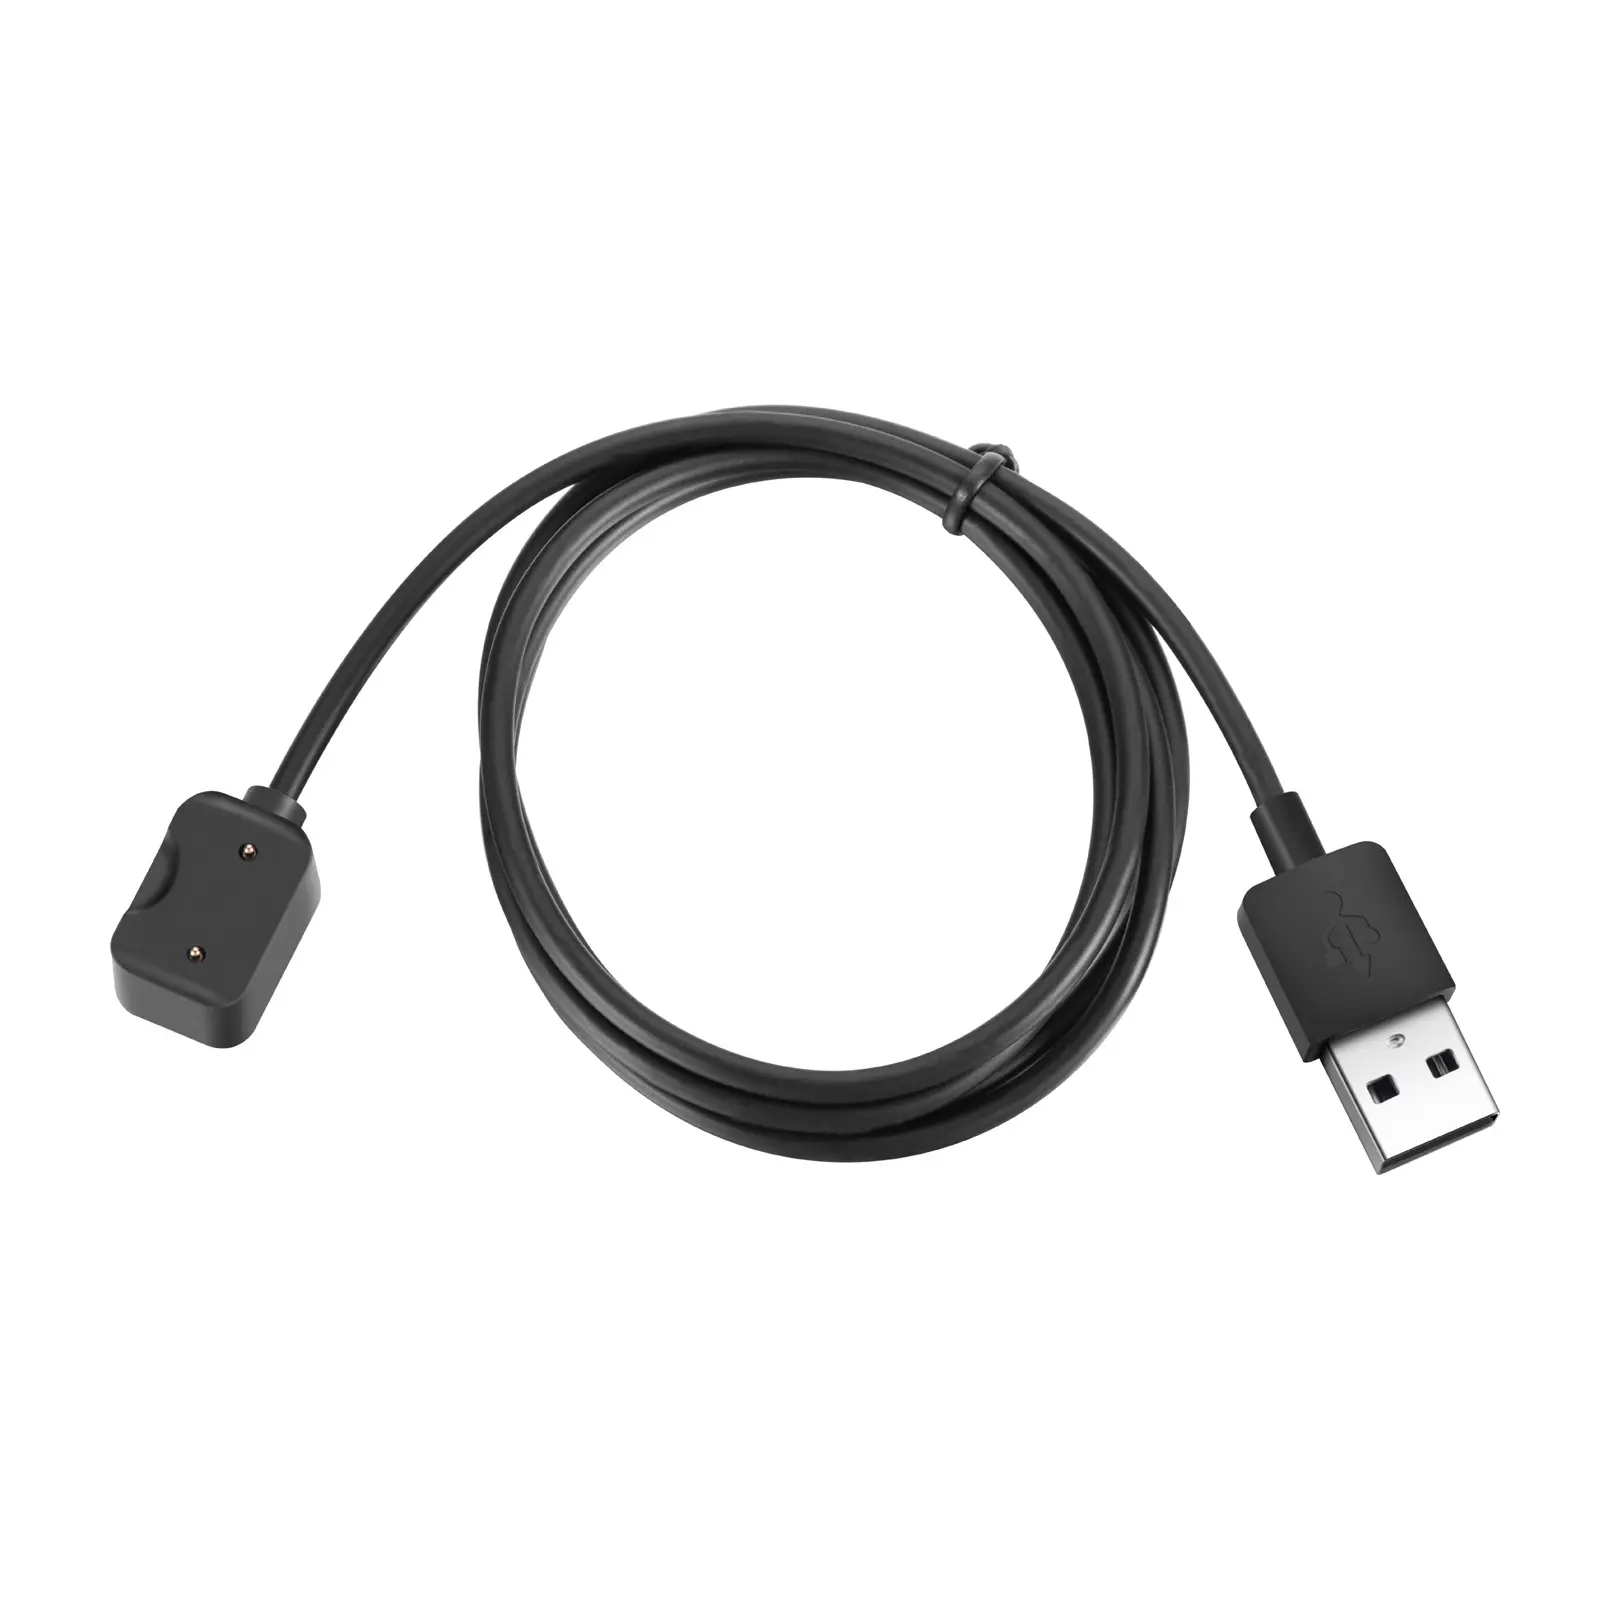 Adattatore per caricabatterie Dock cavo di ricarica USB di alta qualità cavo di sincronizzazione dati per cinturino Smart COR A1702